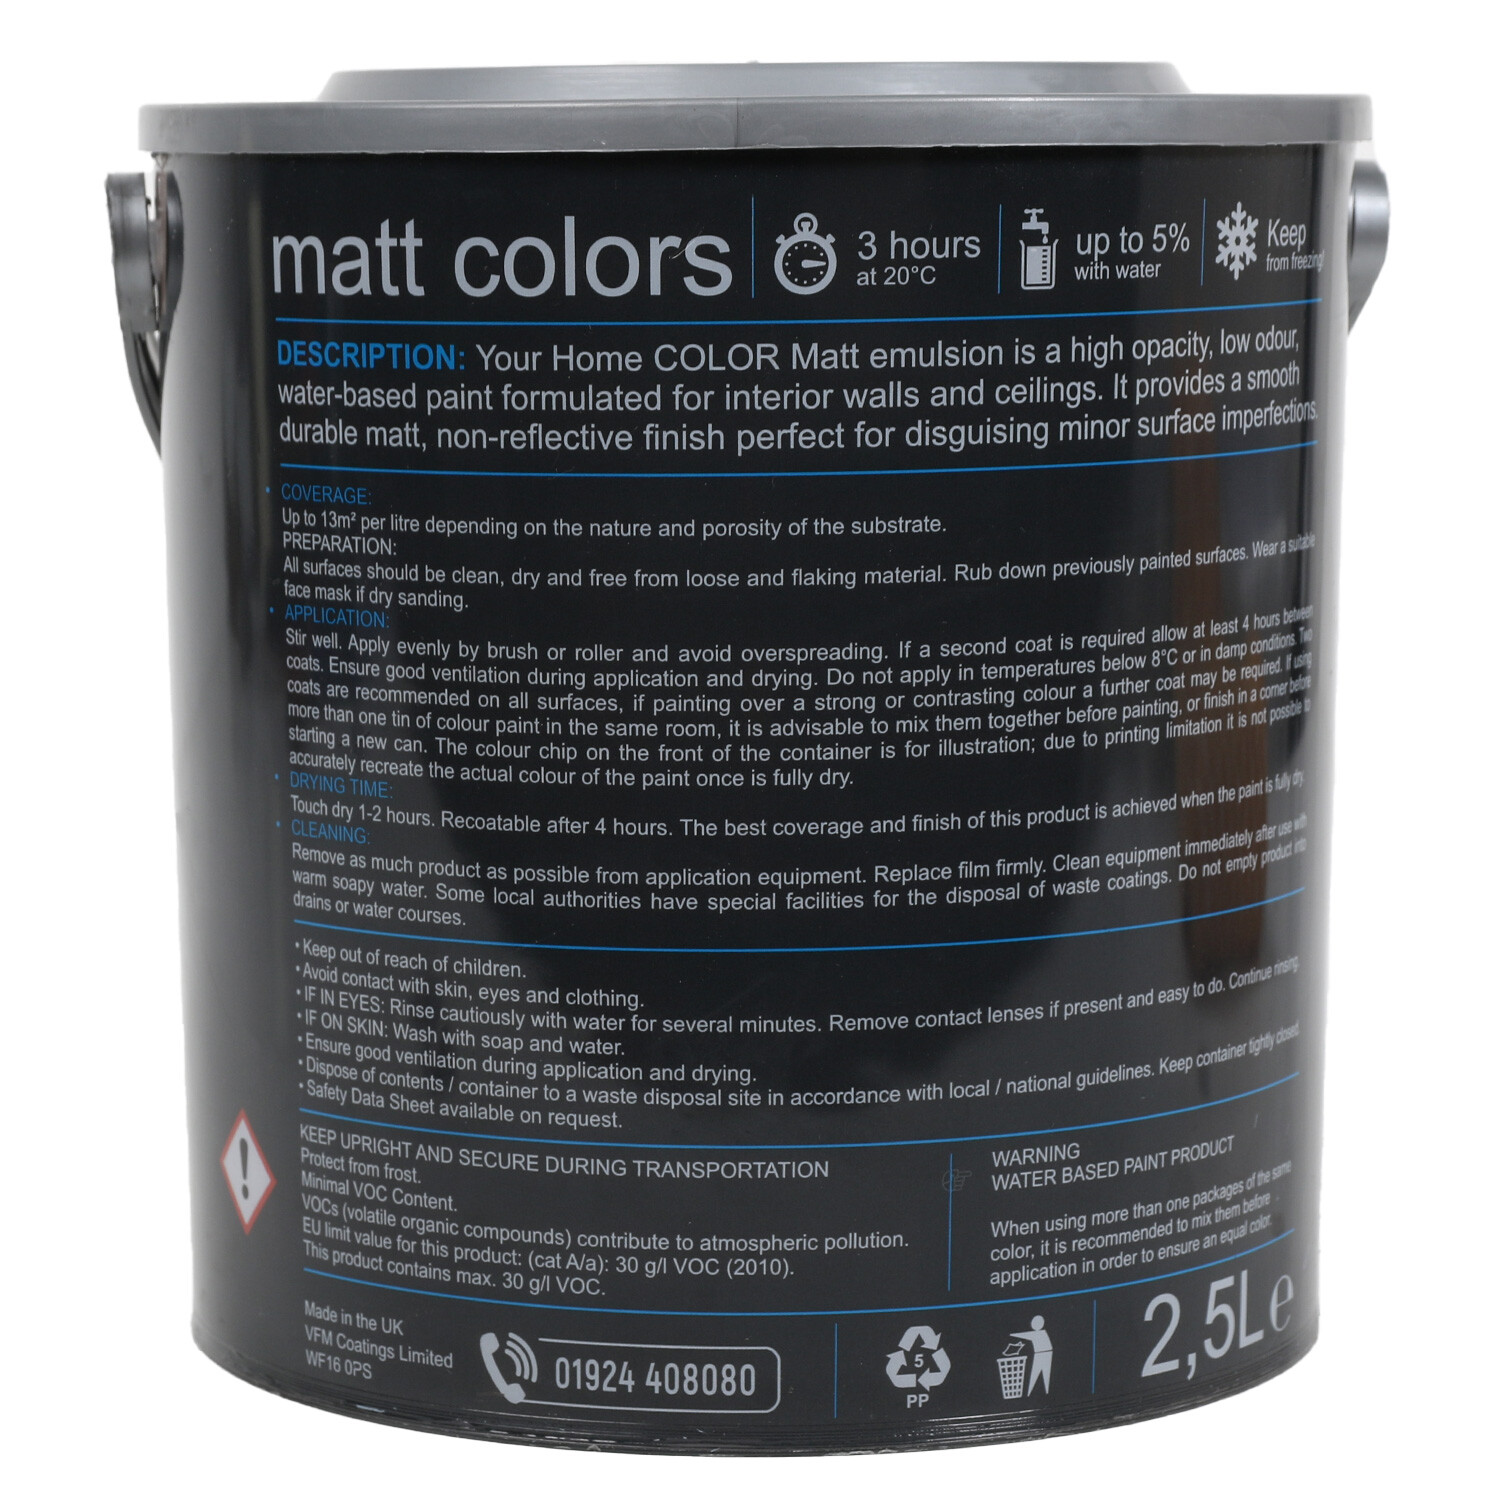 Your Home Walls & Ceilings Truffle Matt Emulsion Paint 2.5L Image 2